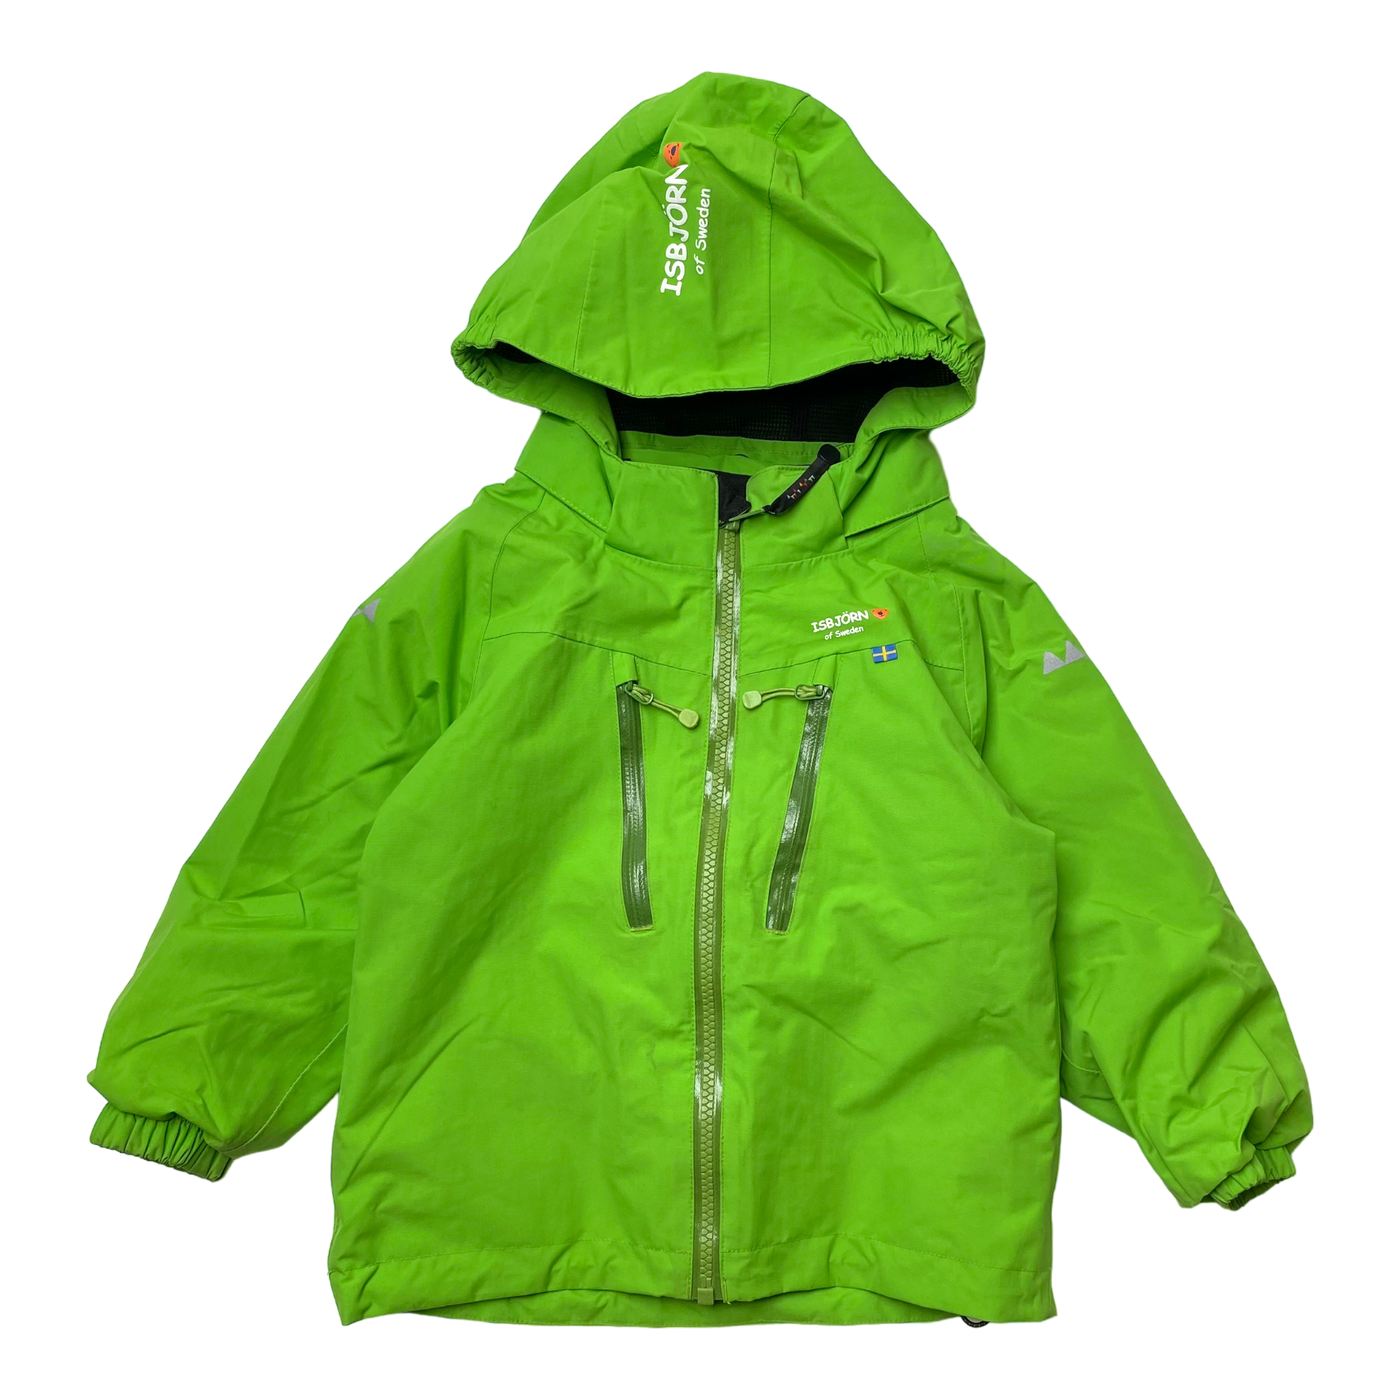 Isbjörn halton jacket, lime green | 86/92cm